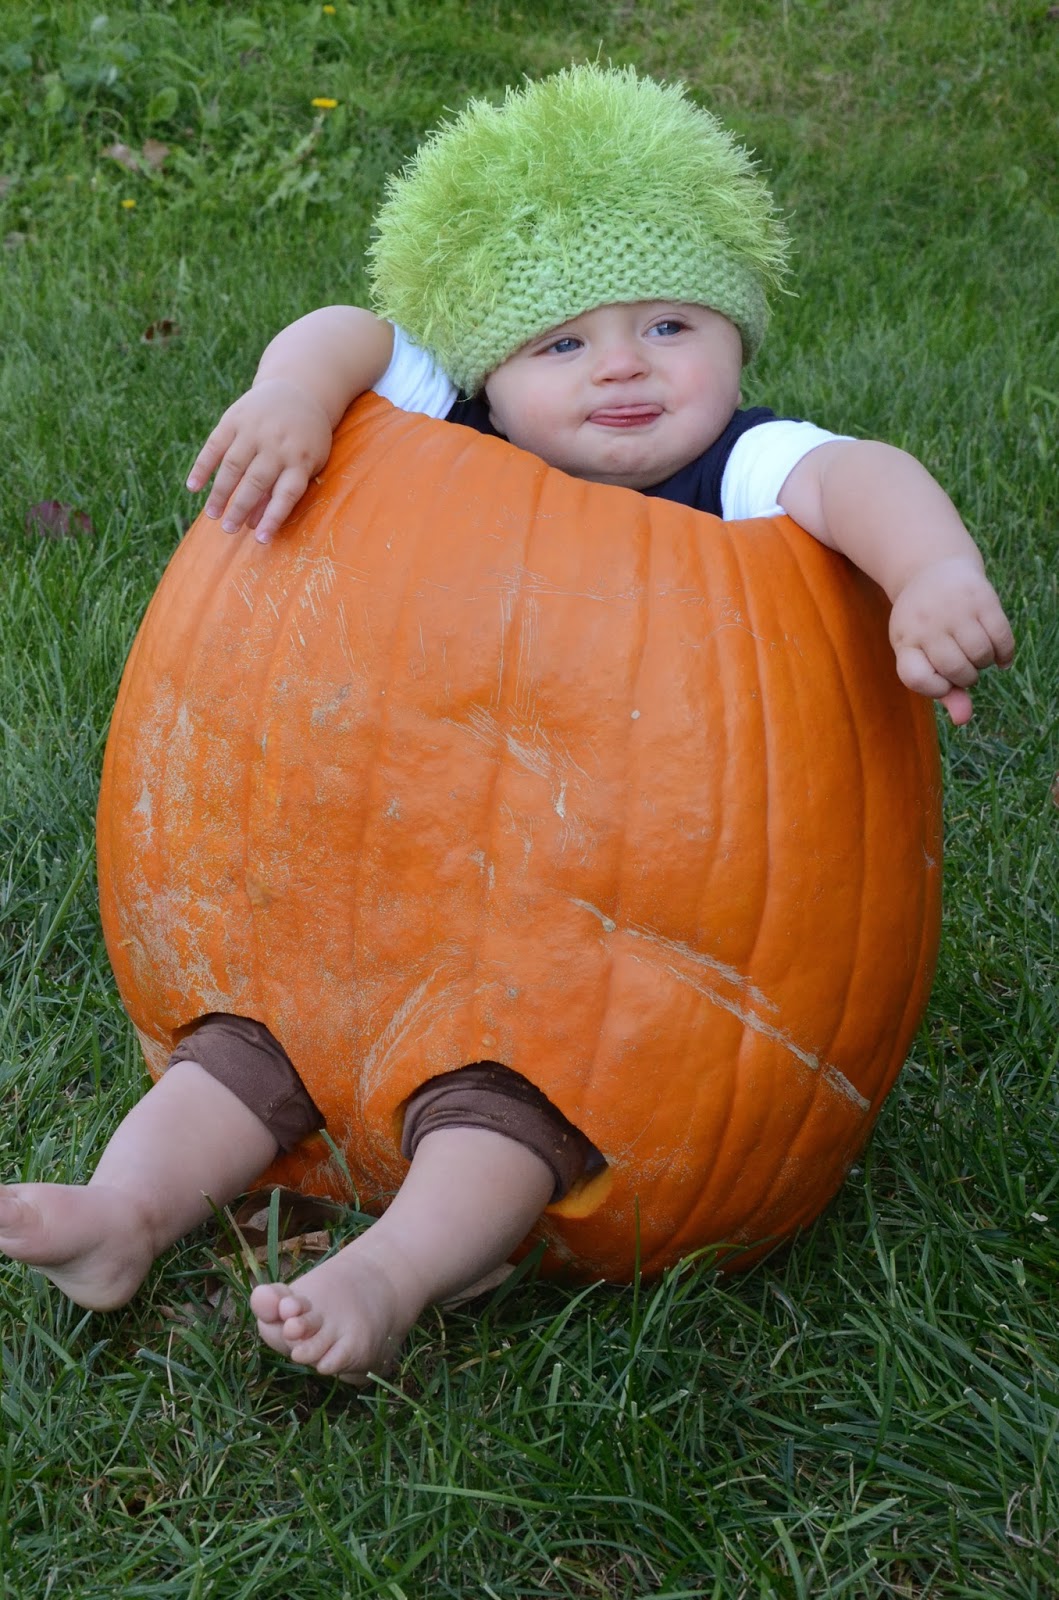 The Steg Family Chronicles: Poor Lil' Pumpkin Boy!